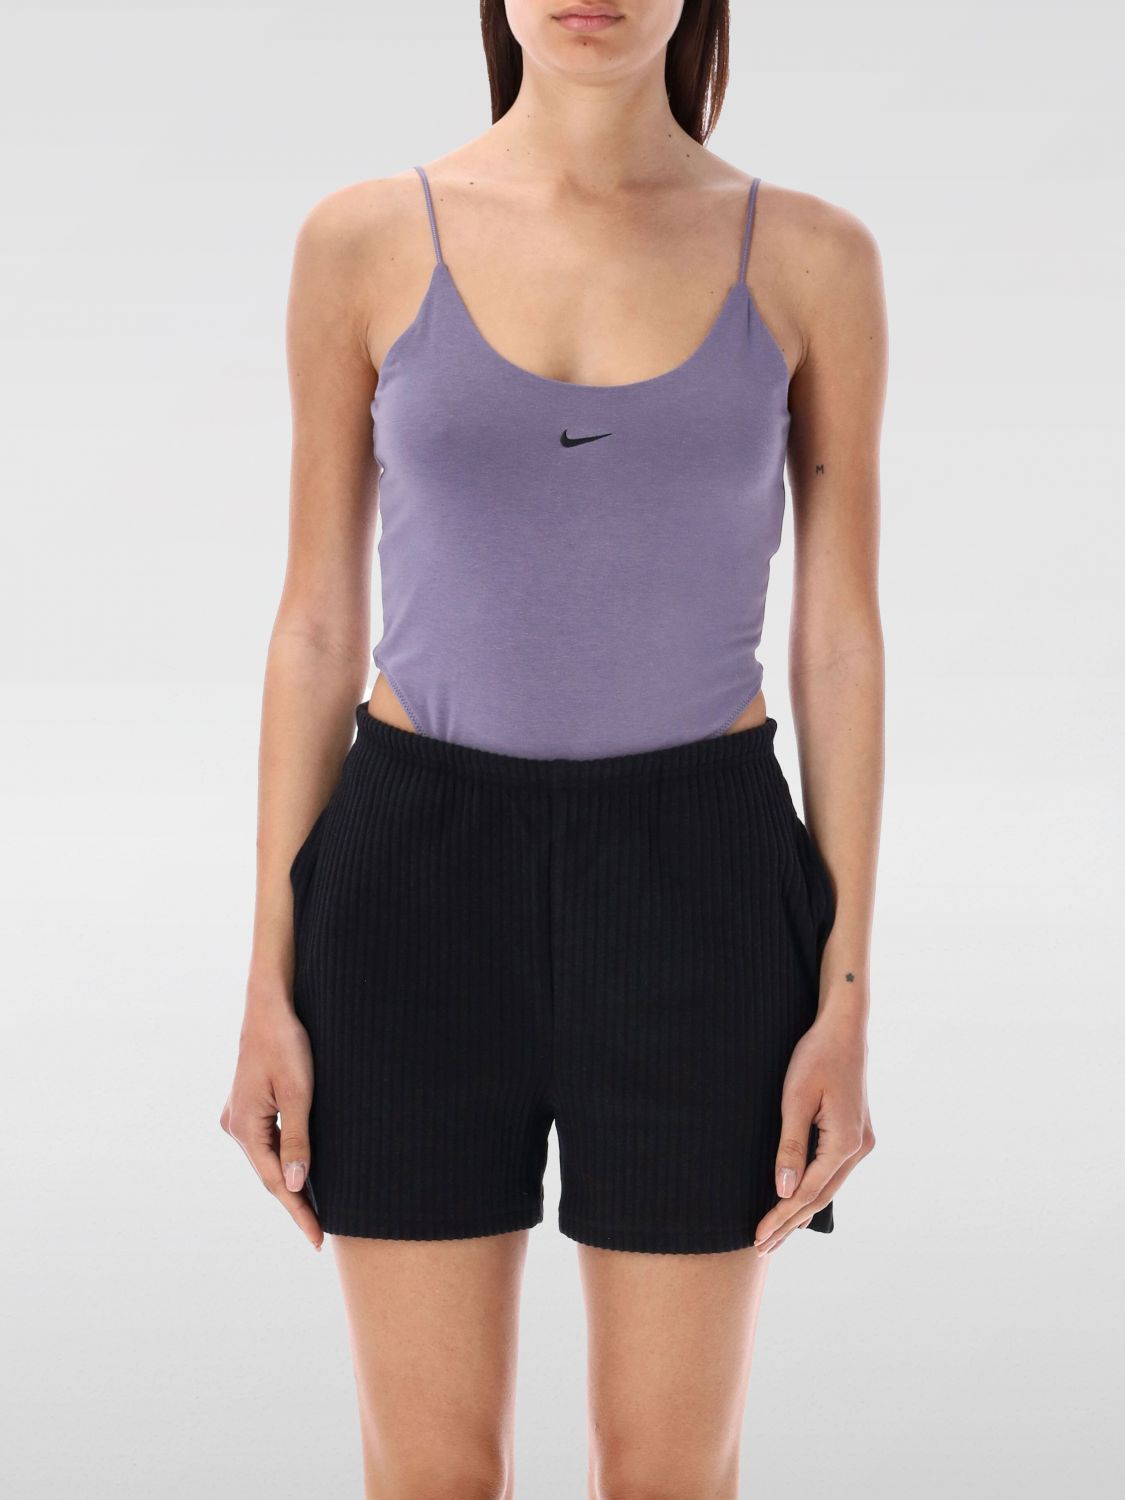 Nike Top NIKE Woman color Violet